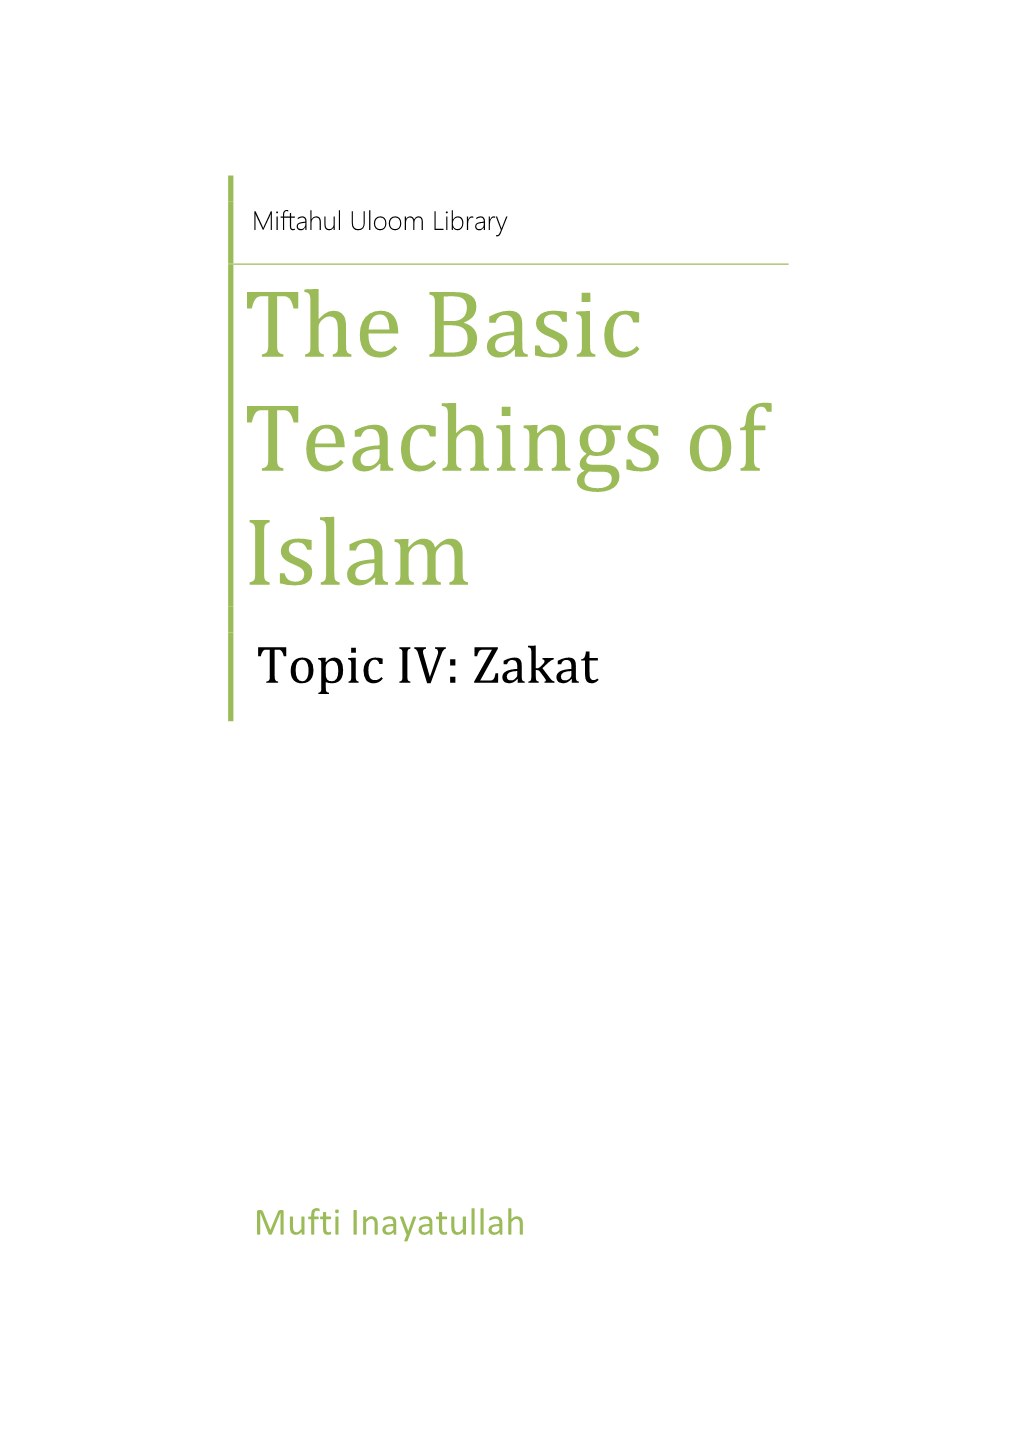 The Basic Teachings of Islam